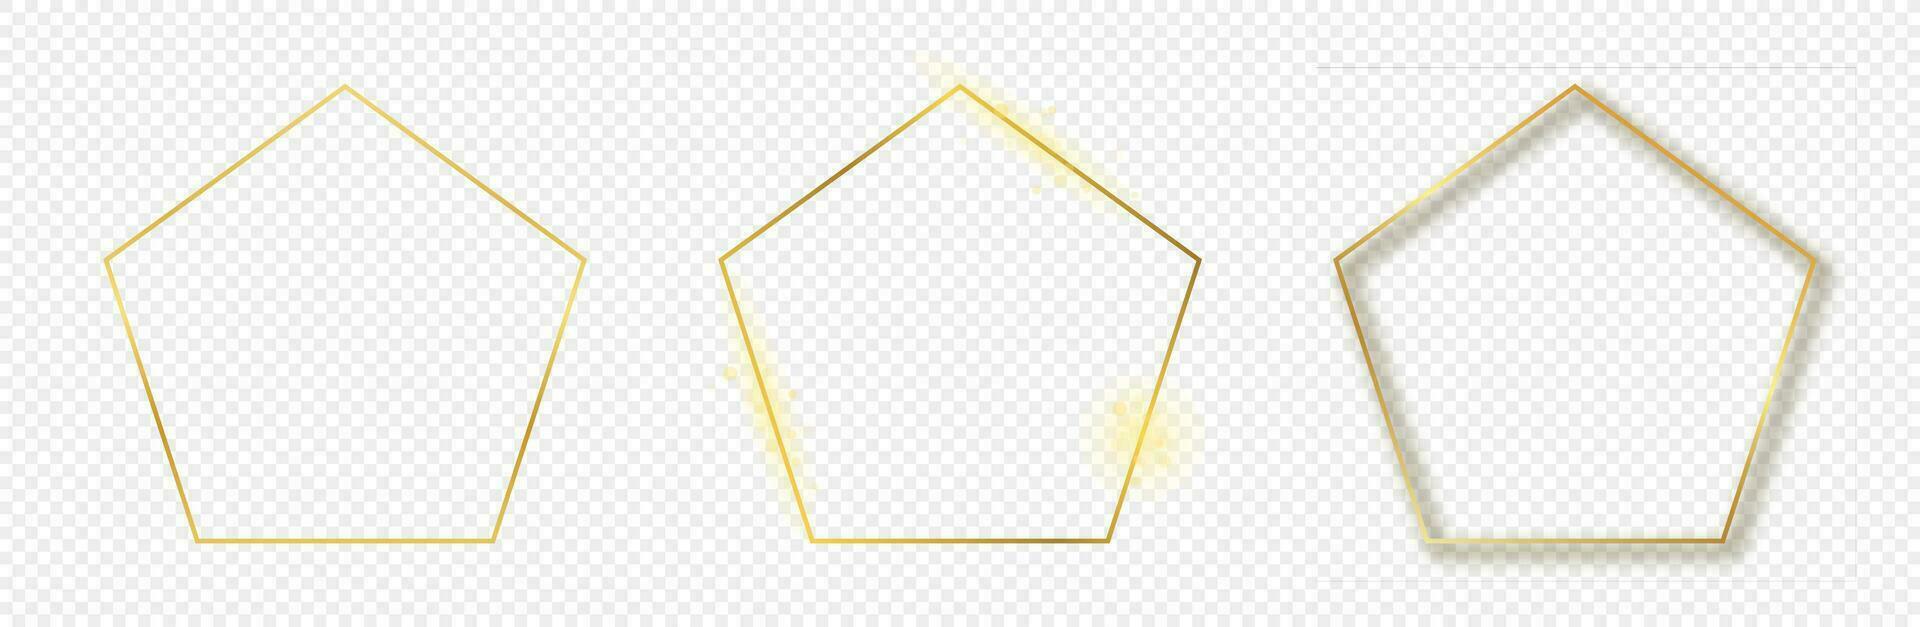 Gold glowing pentagon shape frame vector